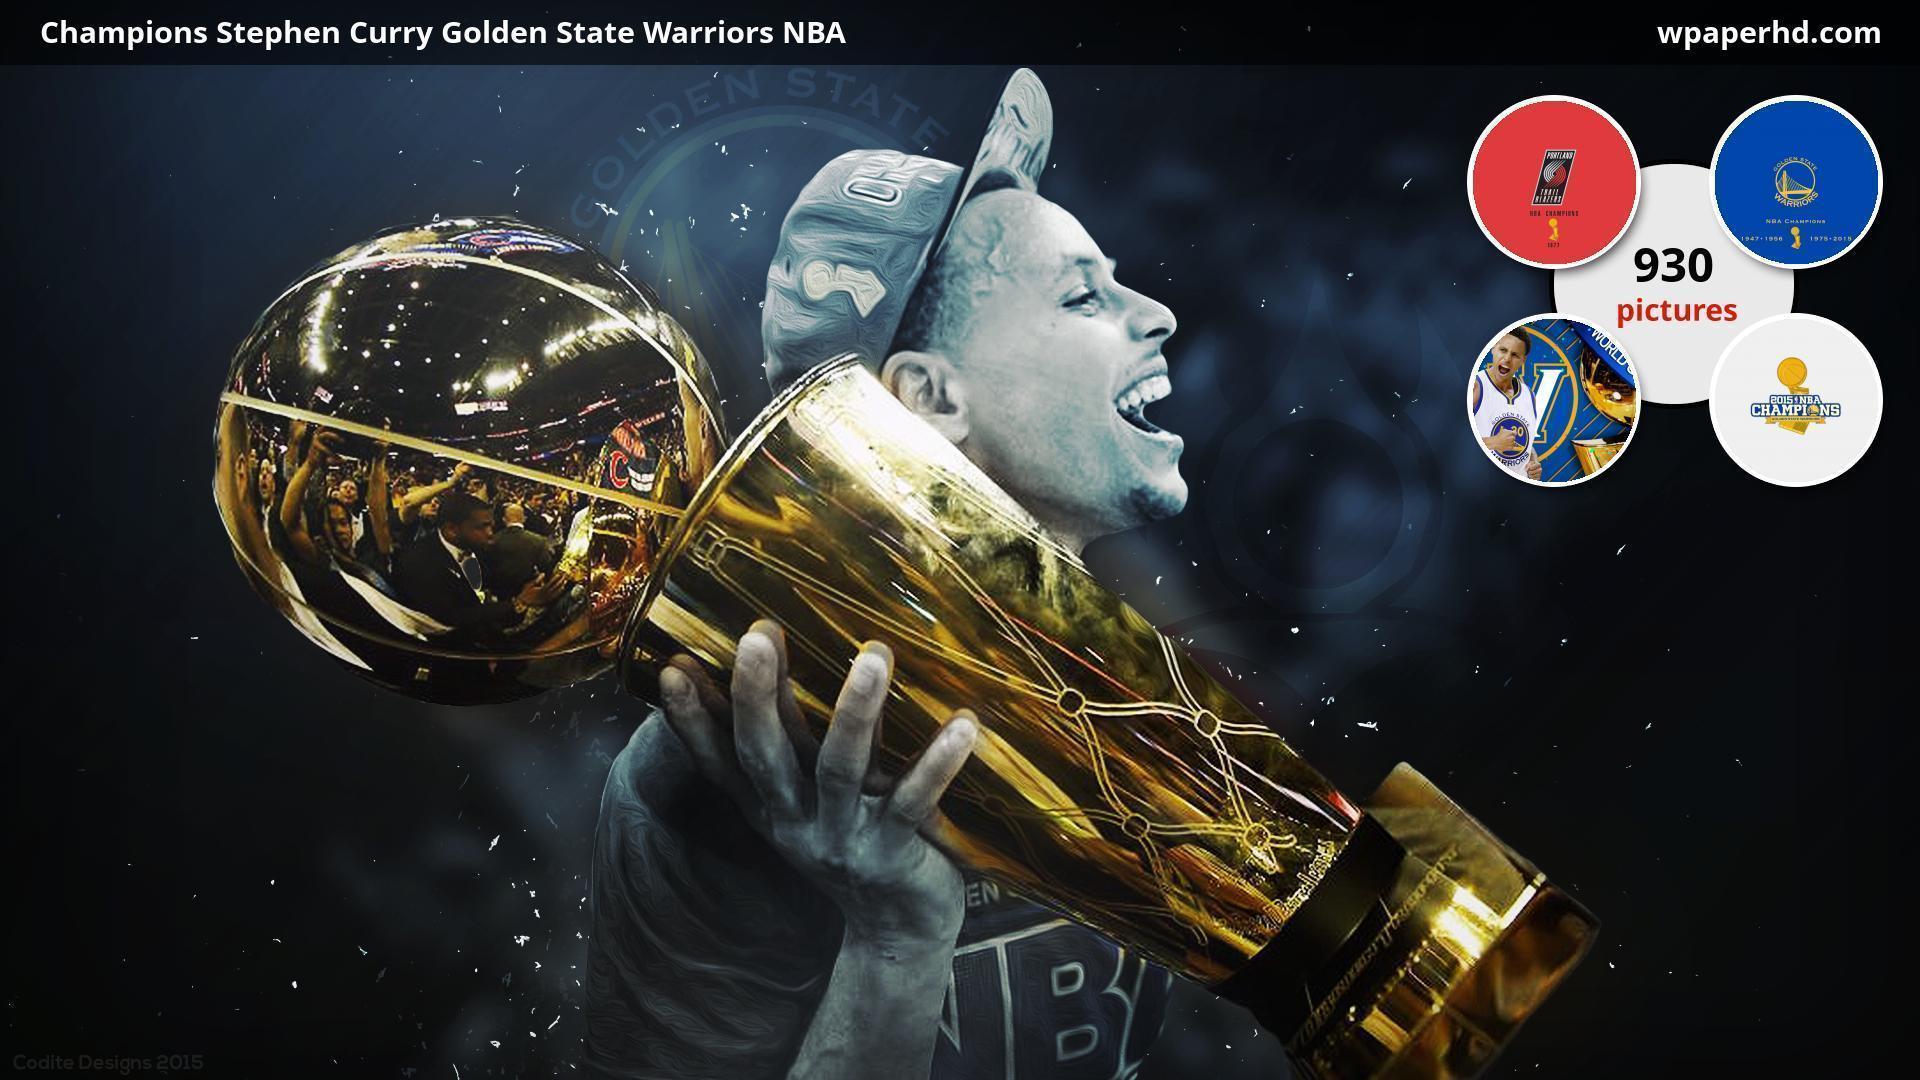 Stephen Curry Golden State Warriors Wallpaper HD Sdeerwallpaper